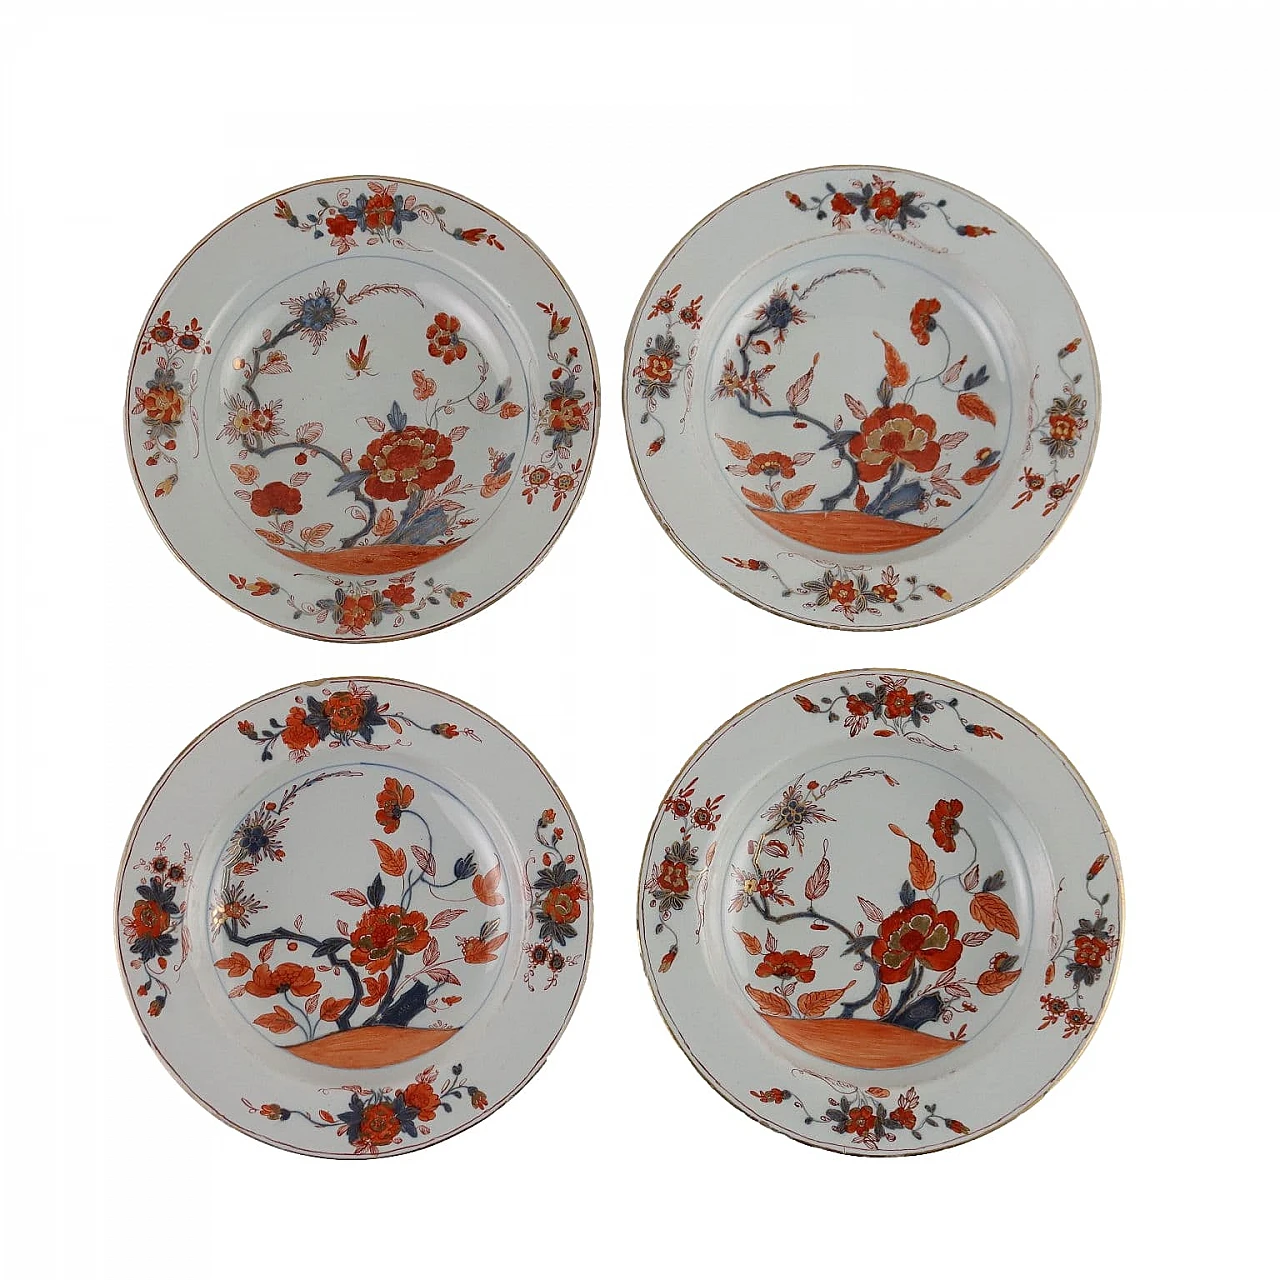 4 Polychrome majolica plates by Rubati, 18th century 1